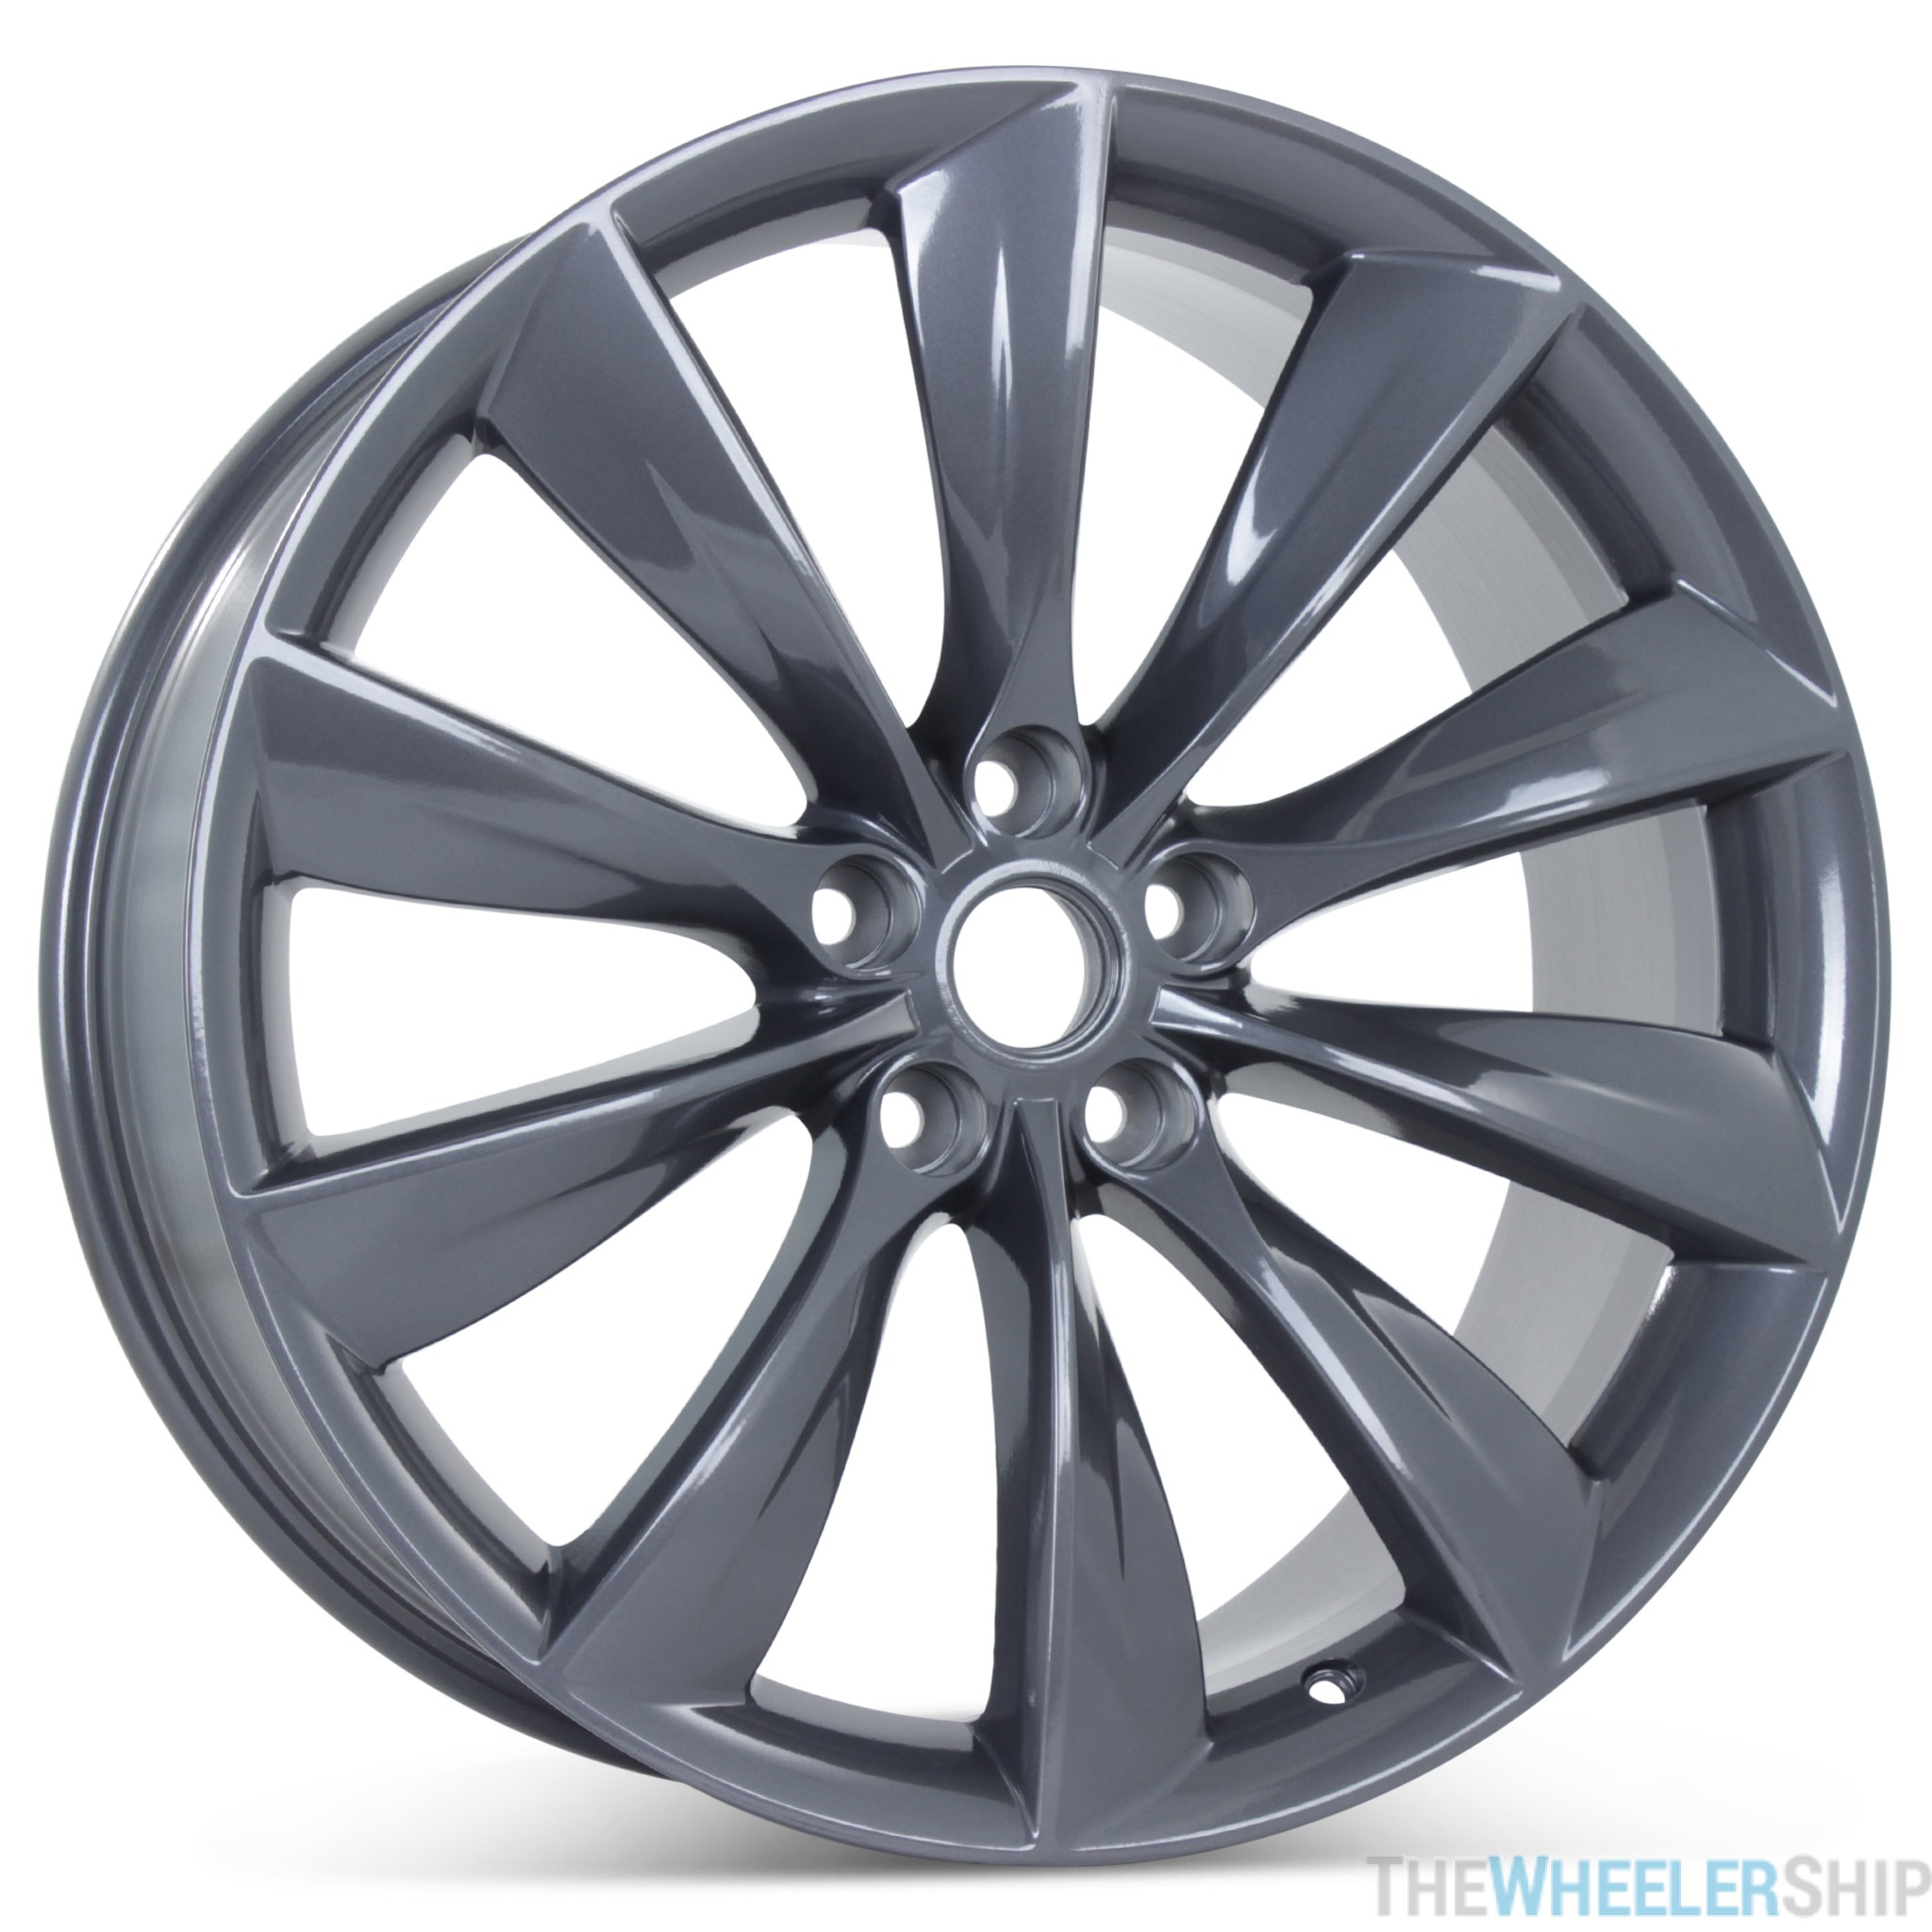 New 21 X 9 Rear Wheel For Tesla Model S 2012 2013 2014 2015 2016 2017 Gray Rim 97095